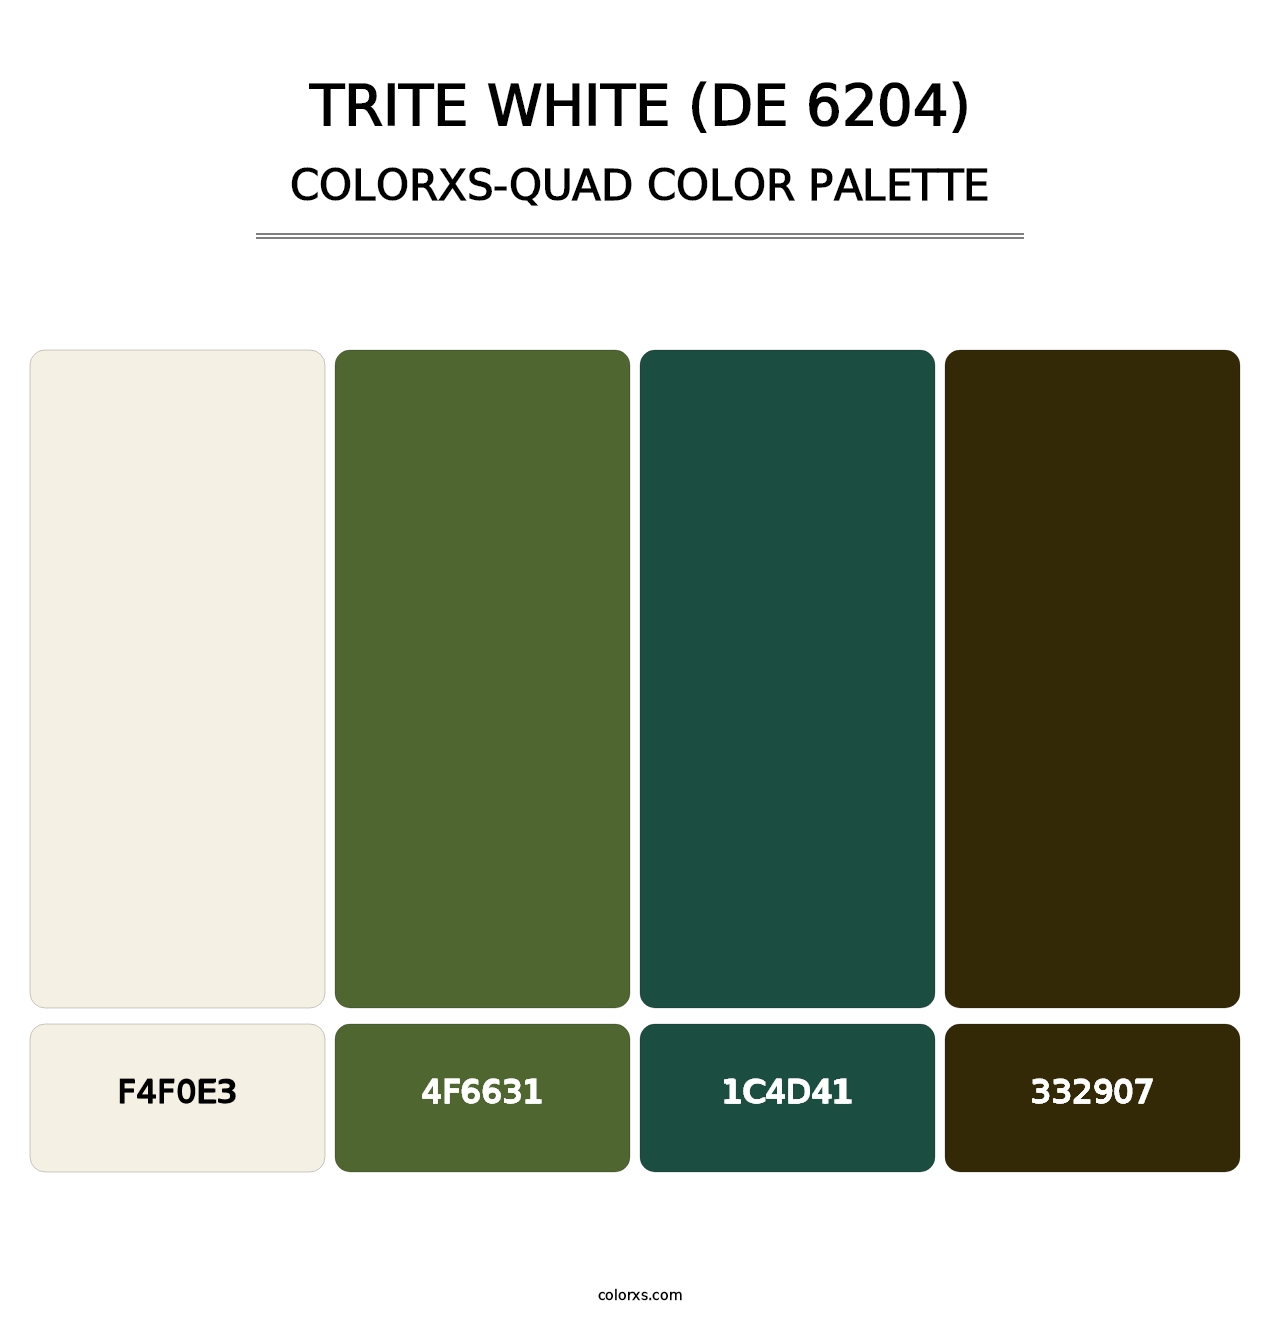 Trite White (DE 6204) - Colorxs Quad Palette